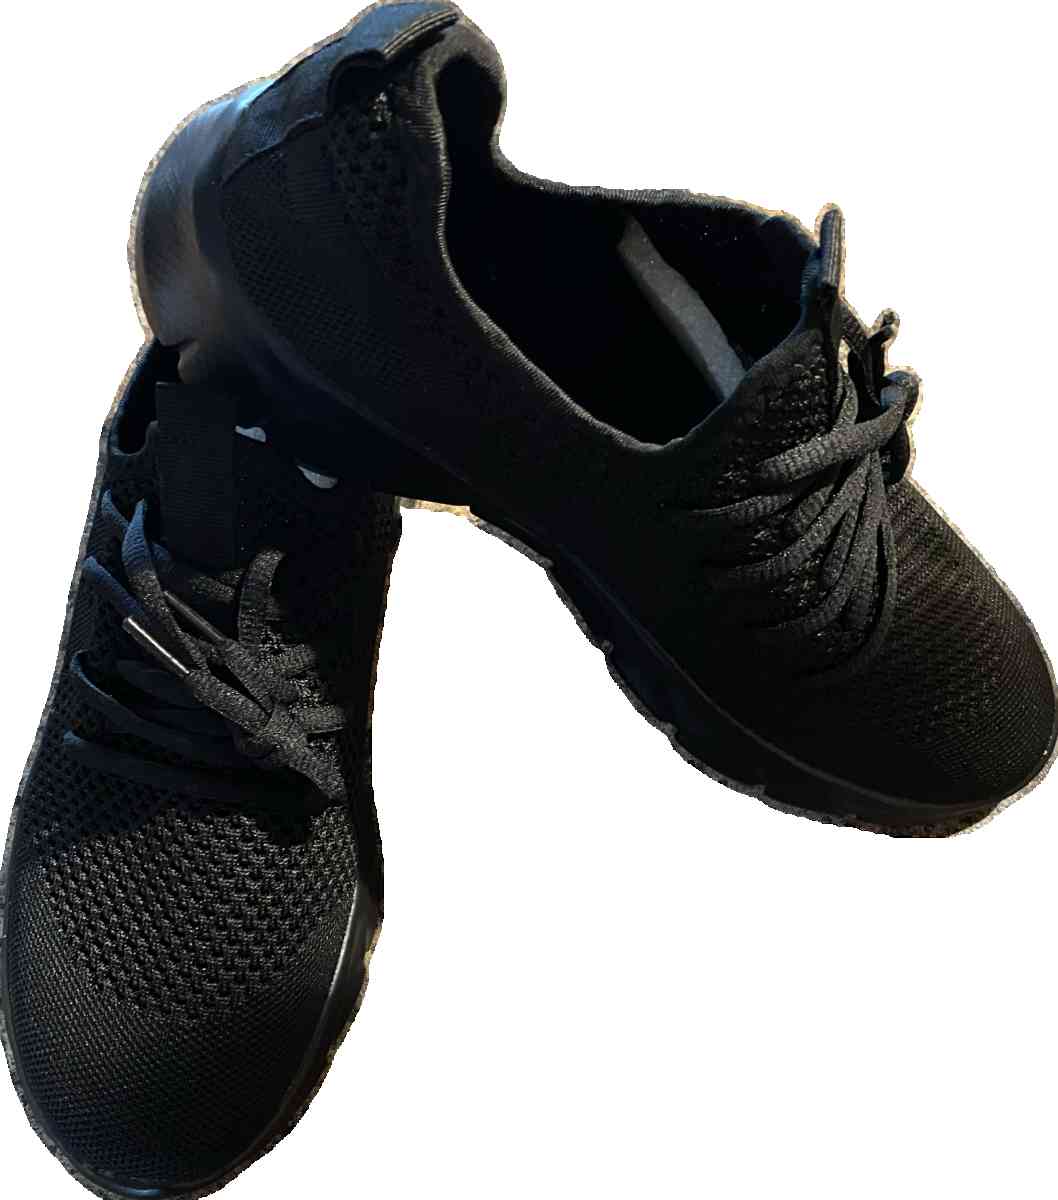 Running tennis shoes